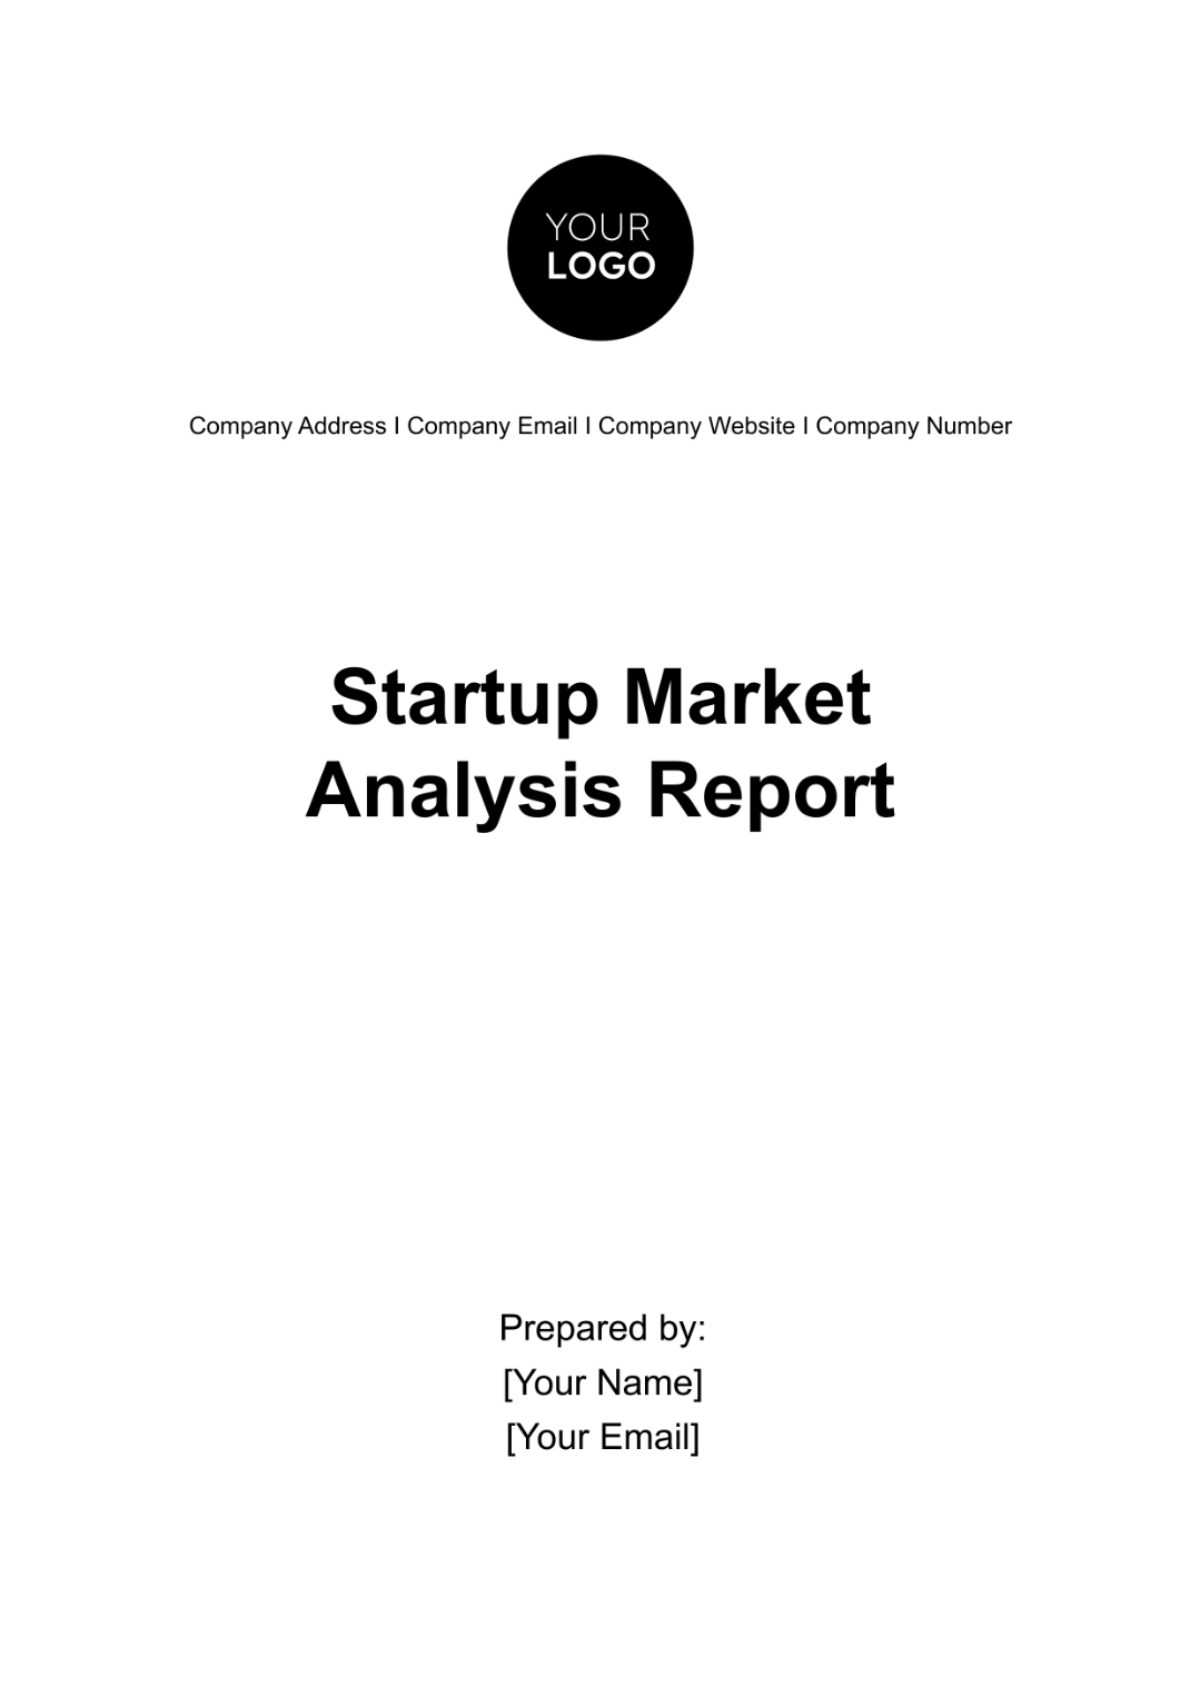 Startup Market Analysis Report Template